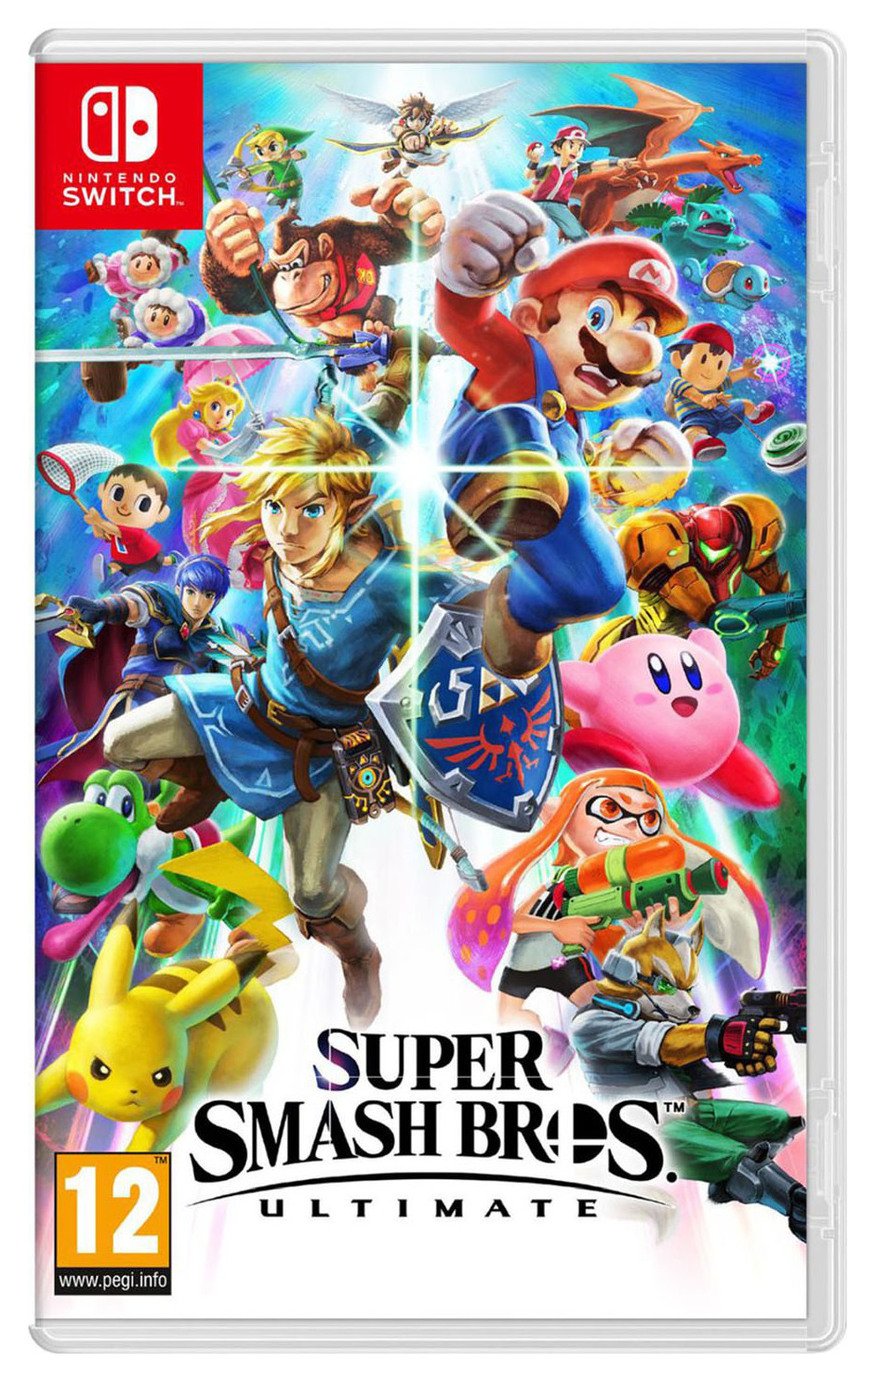 Super Smash Bros Ultimate Nintendo Switch Game